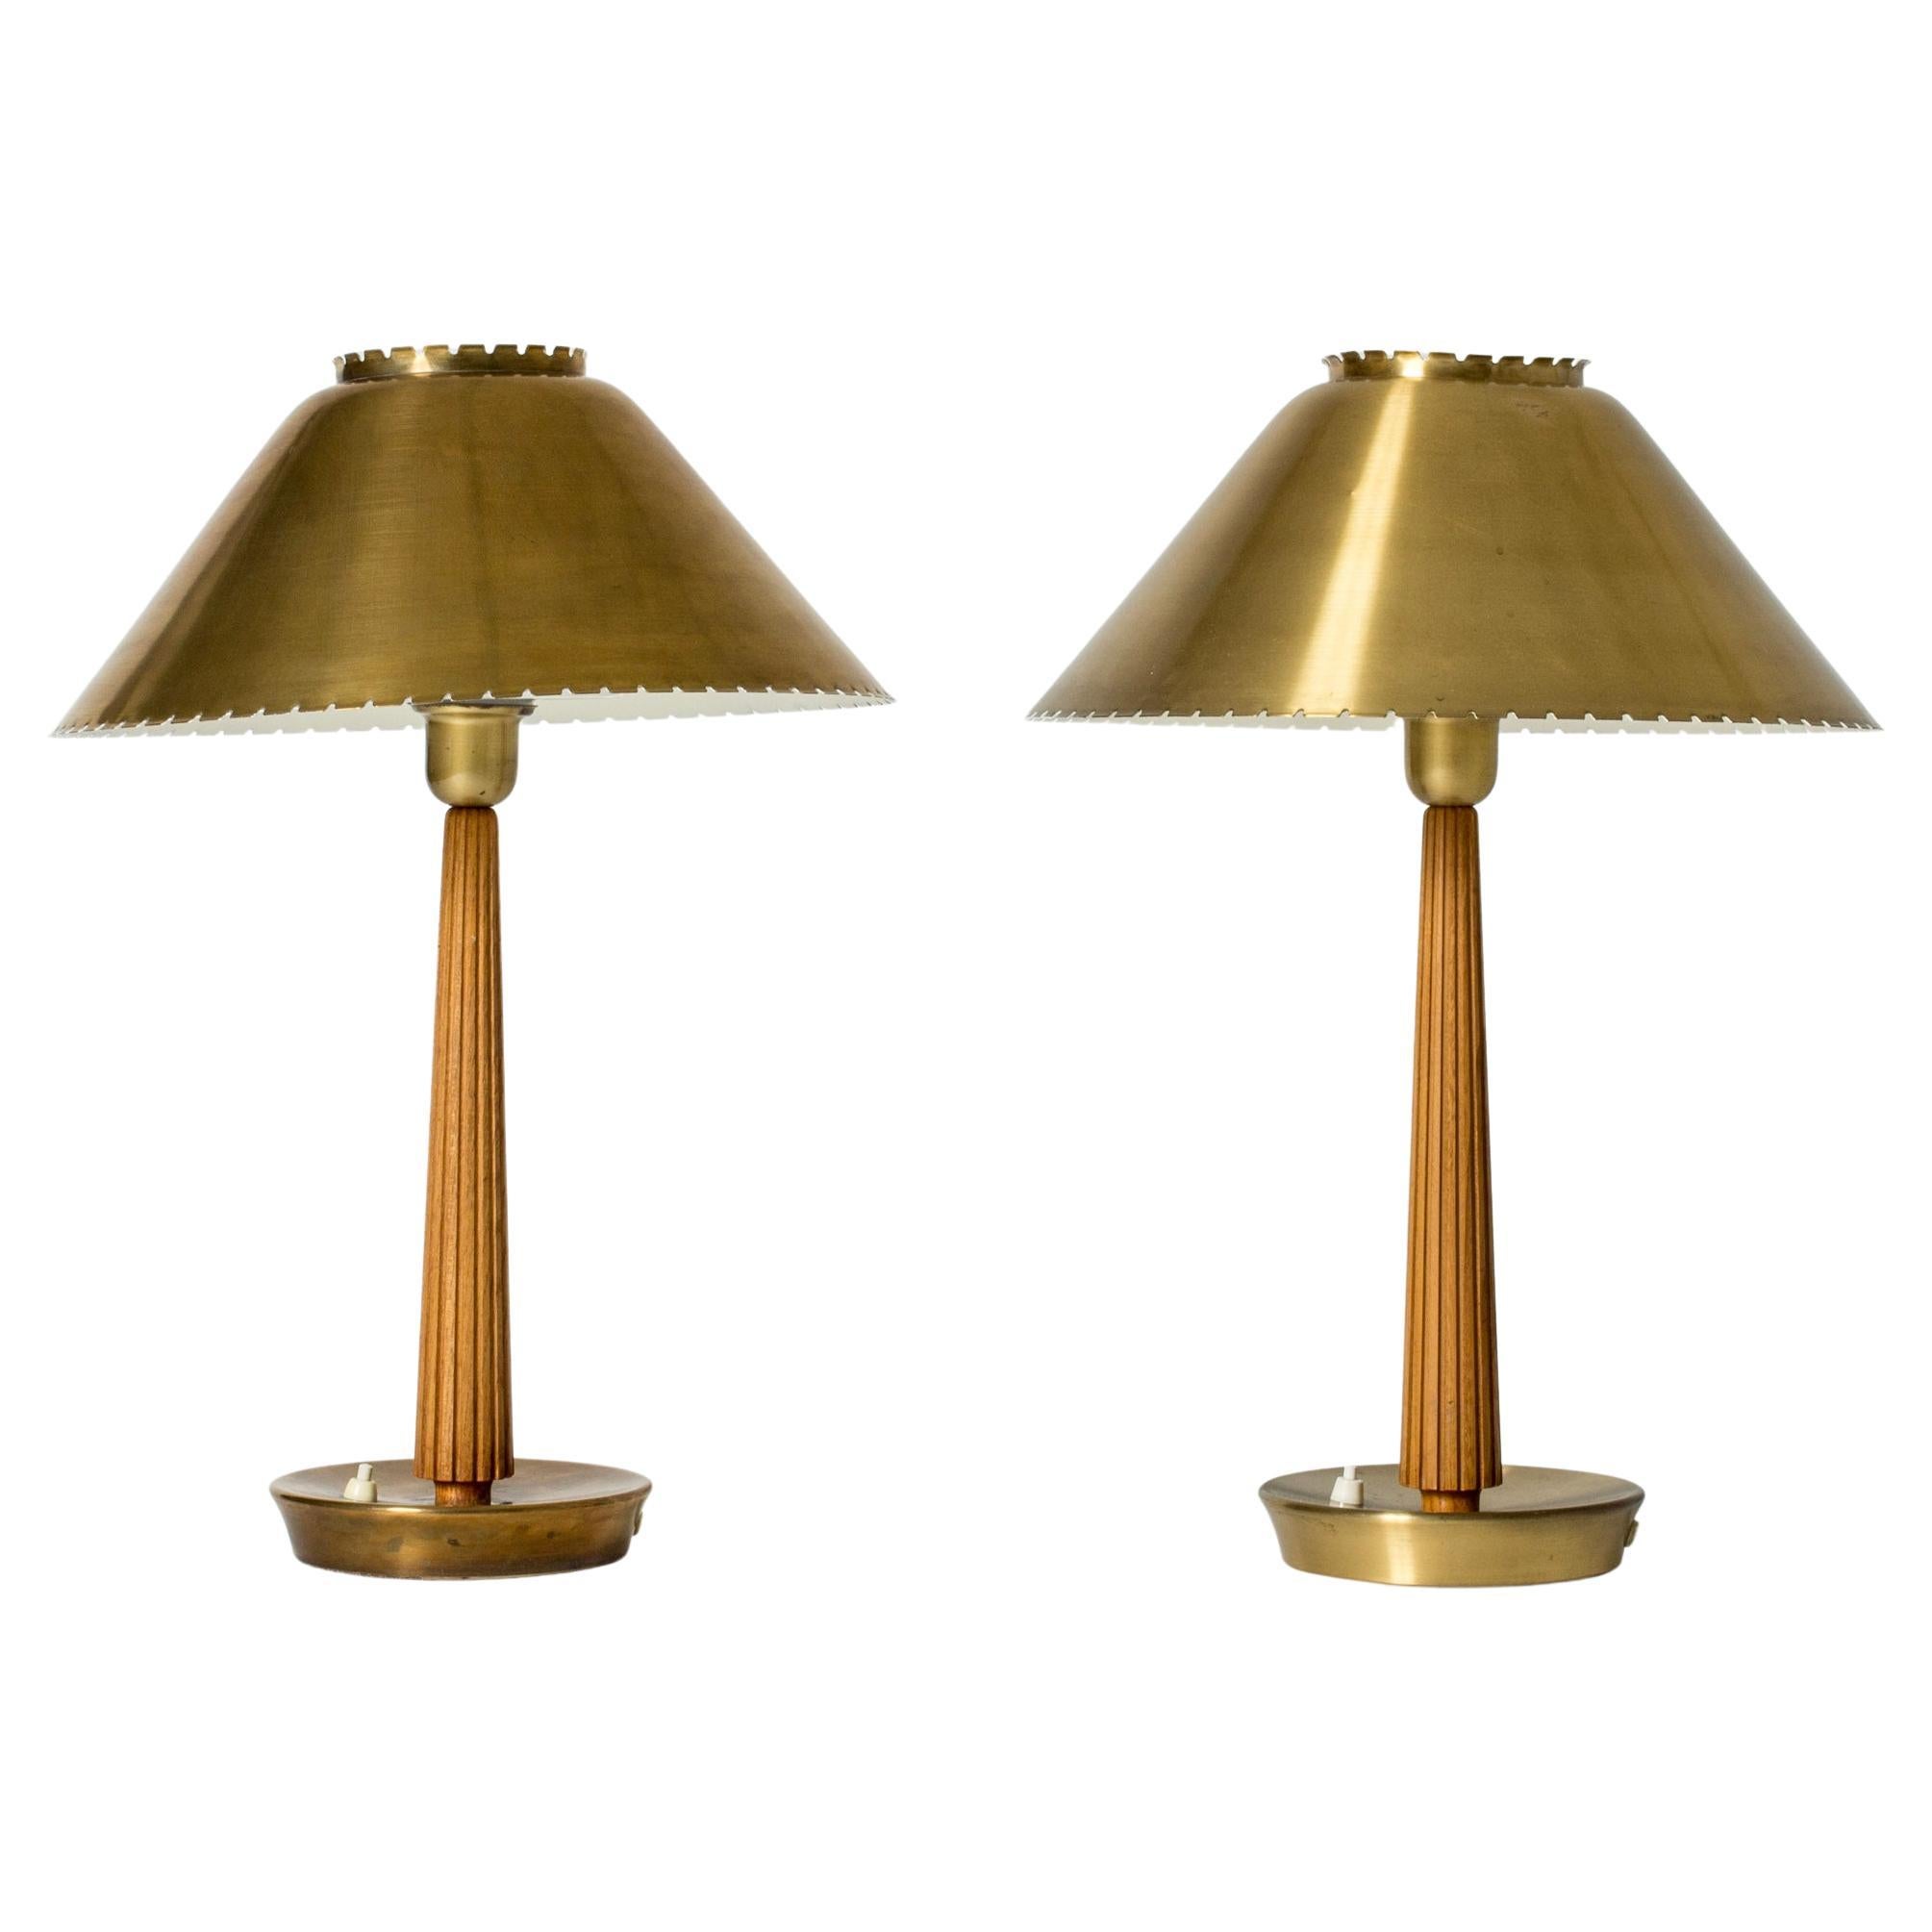 Scandinavian Modern Table Lamps, Hans Bergström, ASEA, Sweden, 1950s For Sale